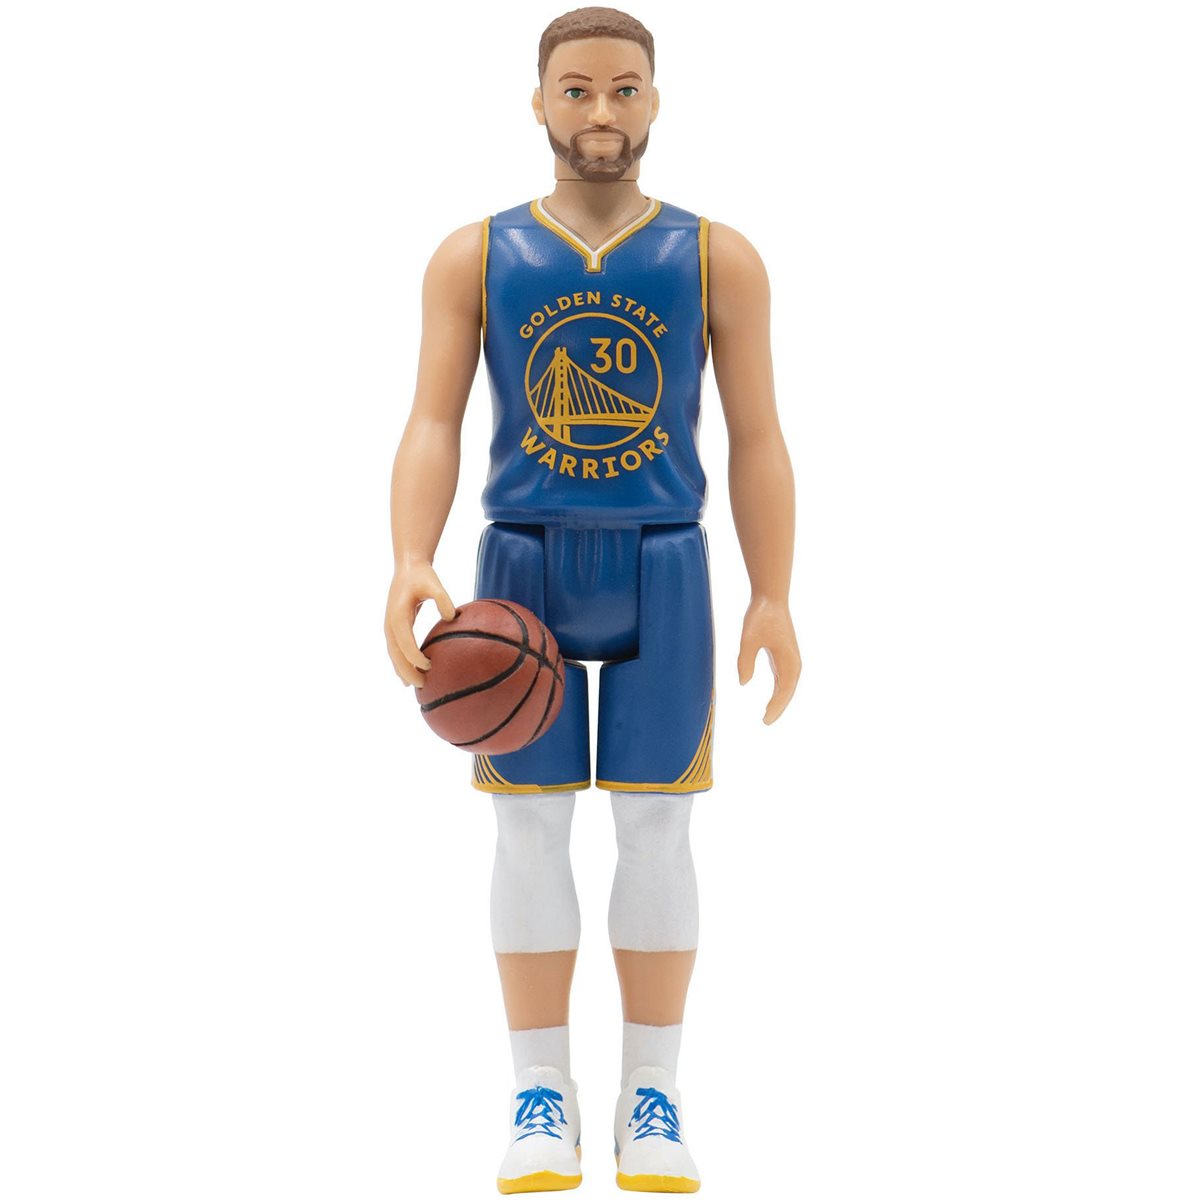 Golden State Warriors Stephen Curry Funko POP! Basketball Player Figurine